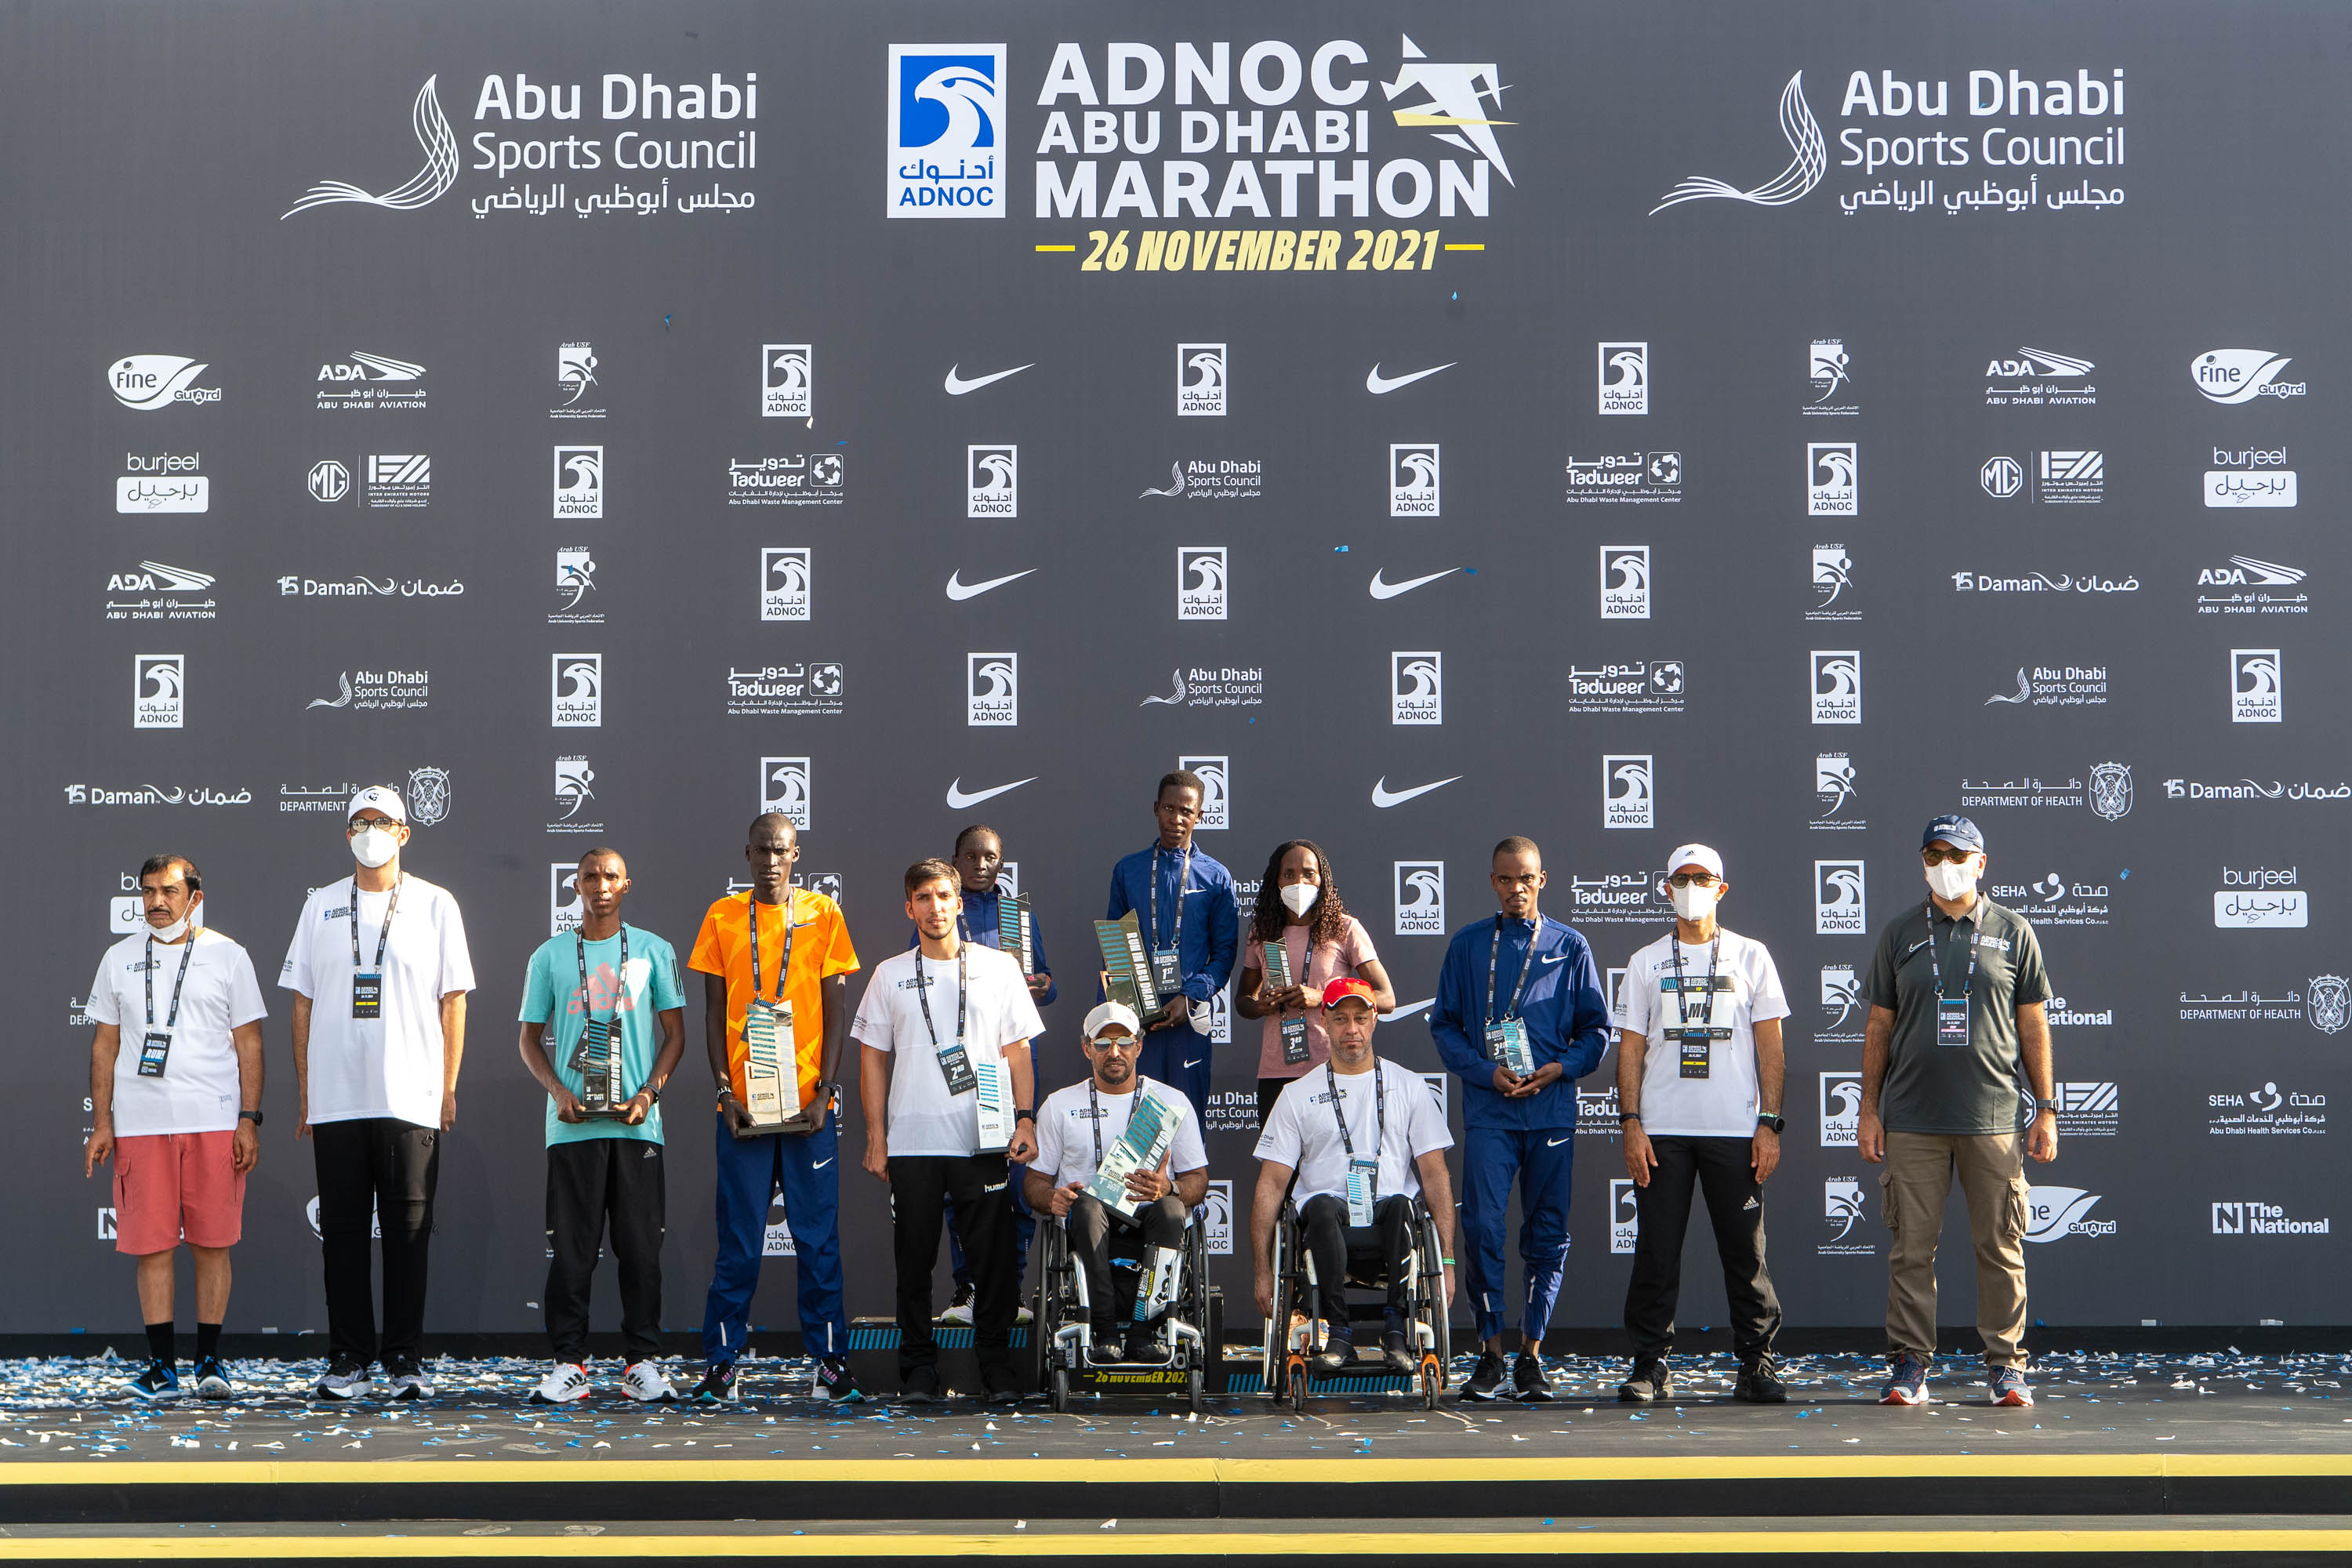 Titus Ekiruand Judith Jeptum Korir Win The 2021 ADNOC Abu Dhabi Marathon